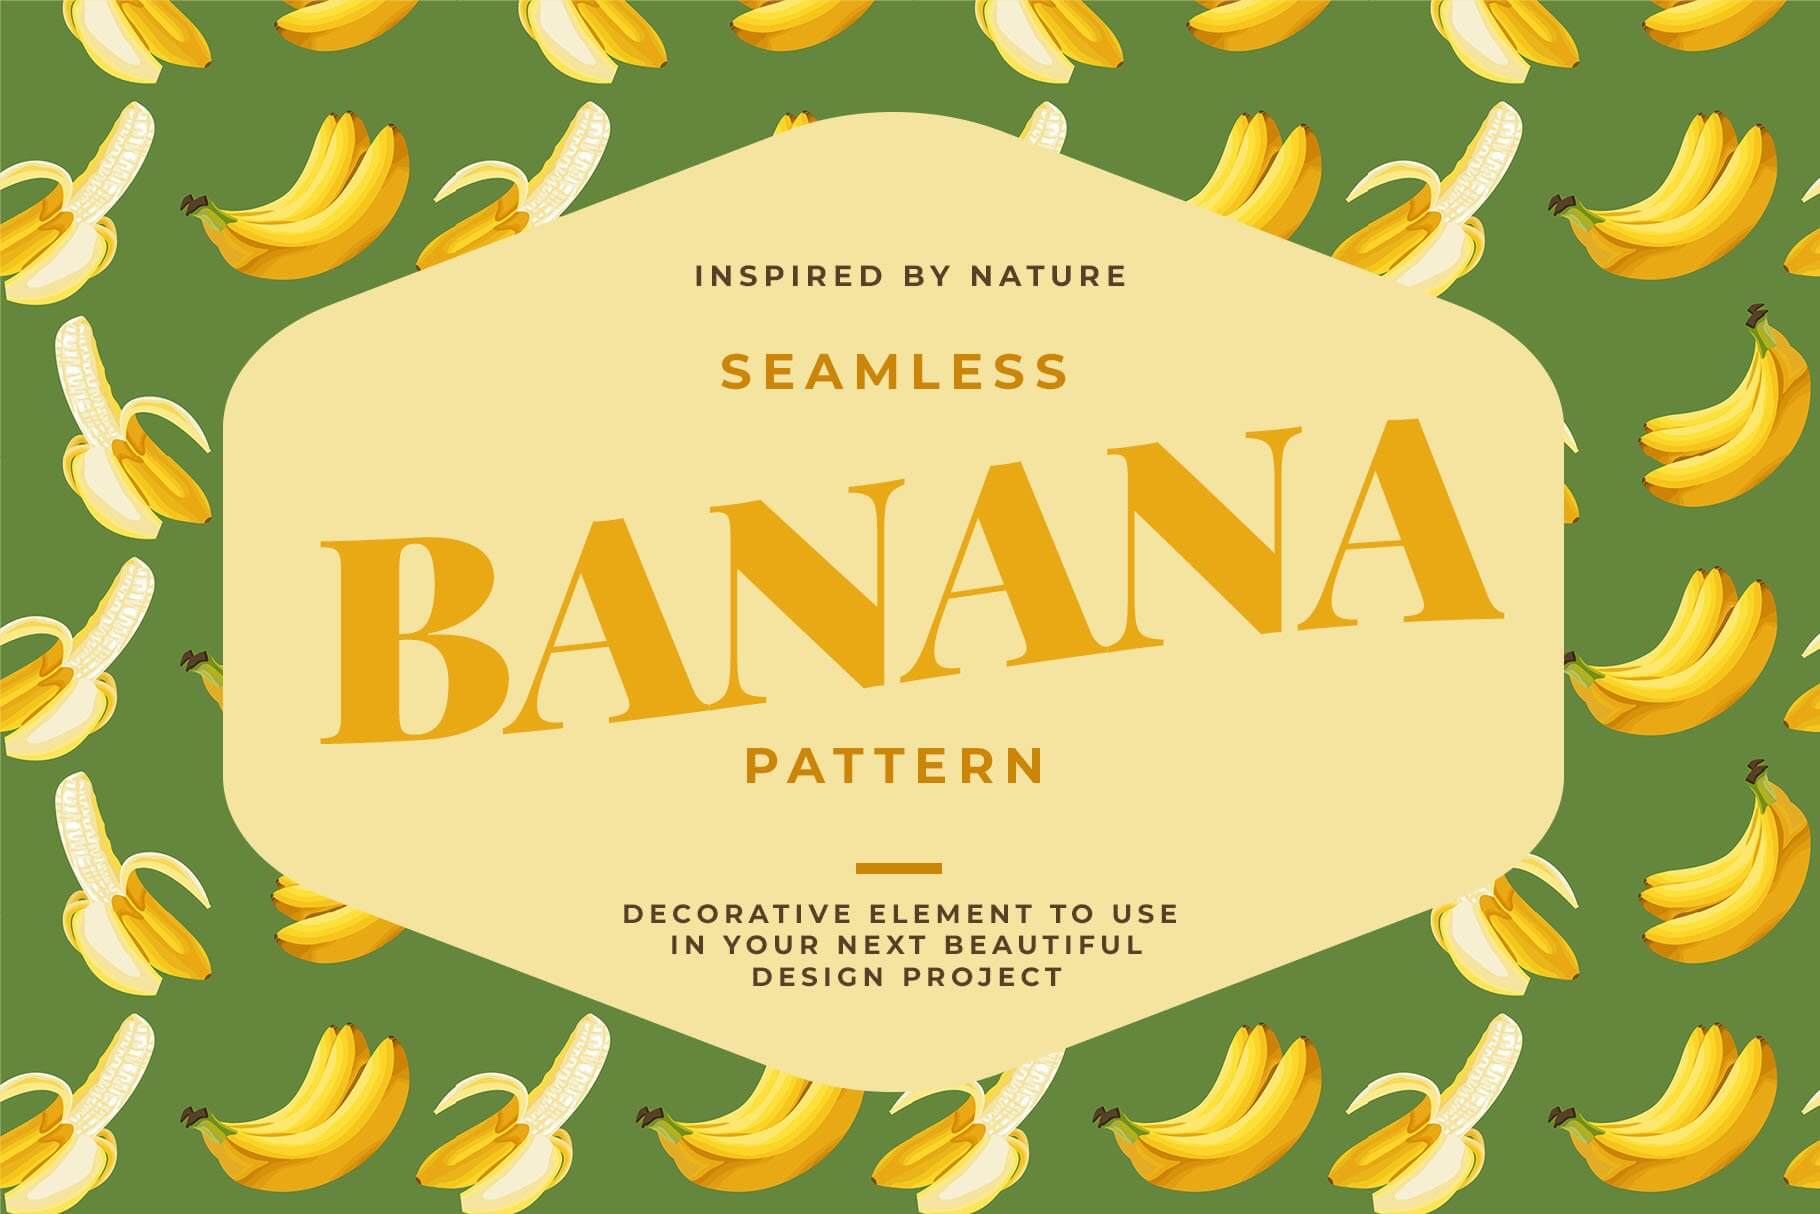 Decorative elements of Banana pattern.